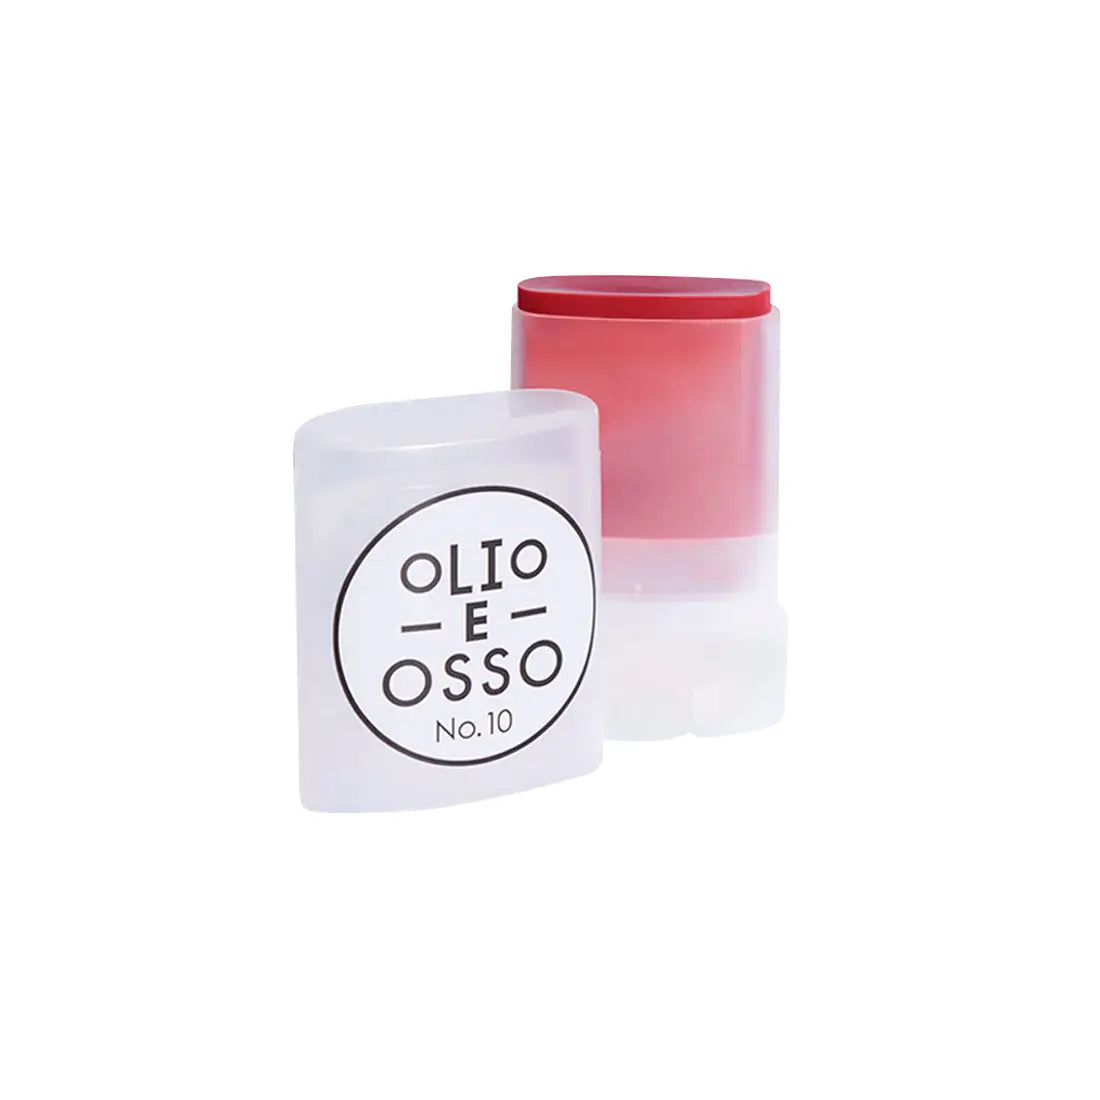 Olio E Osso Tinted Balm No. 10 TeaRose - Free Shipping 